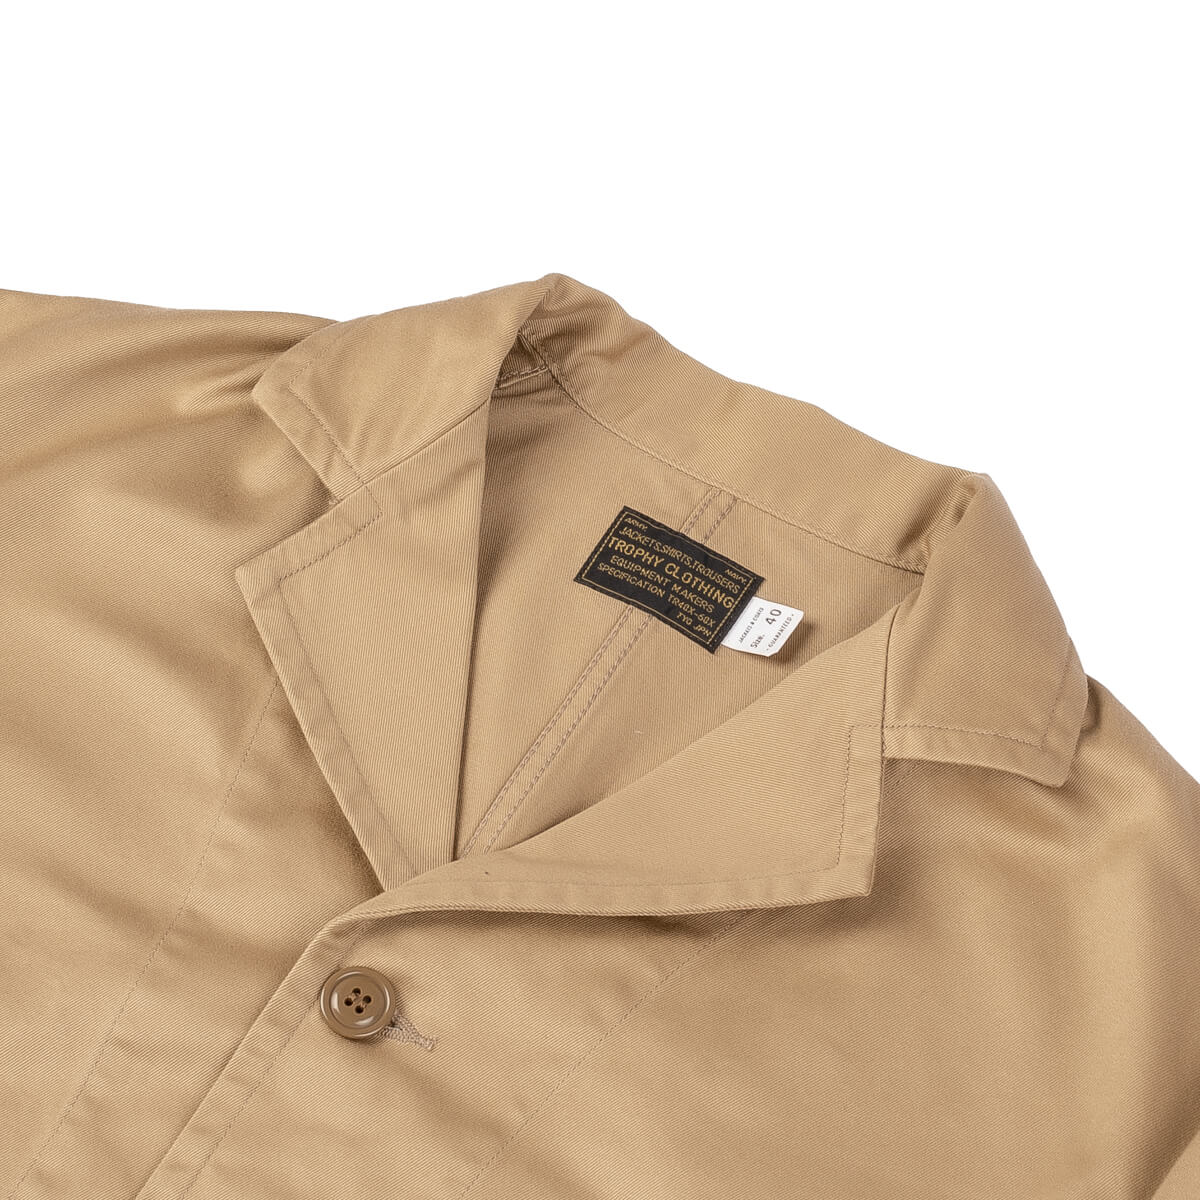 Civilian Jacket - Khaki